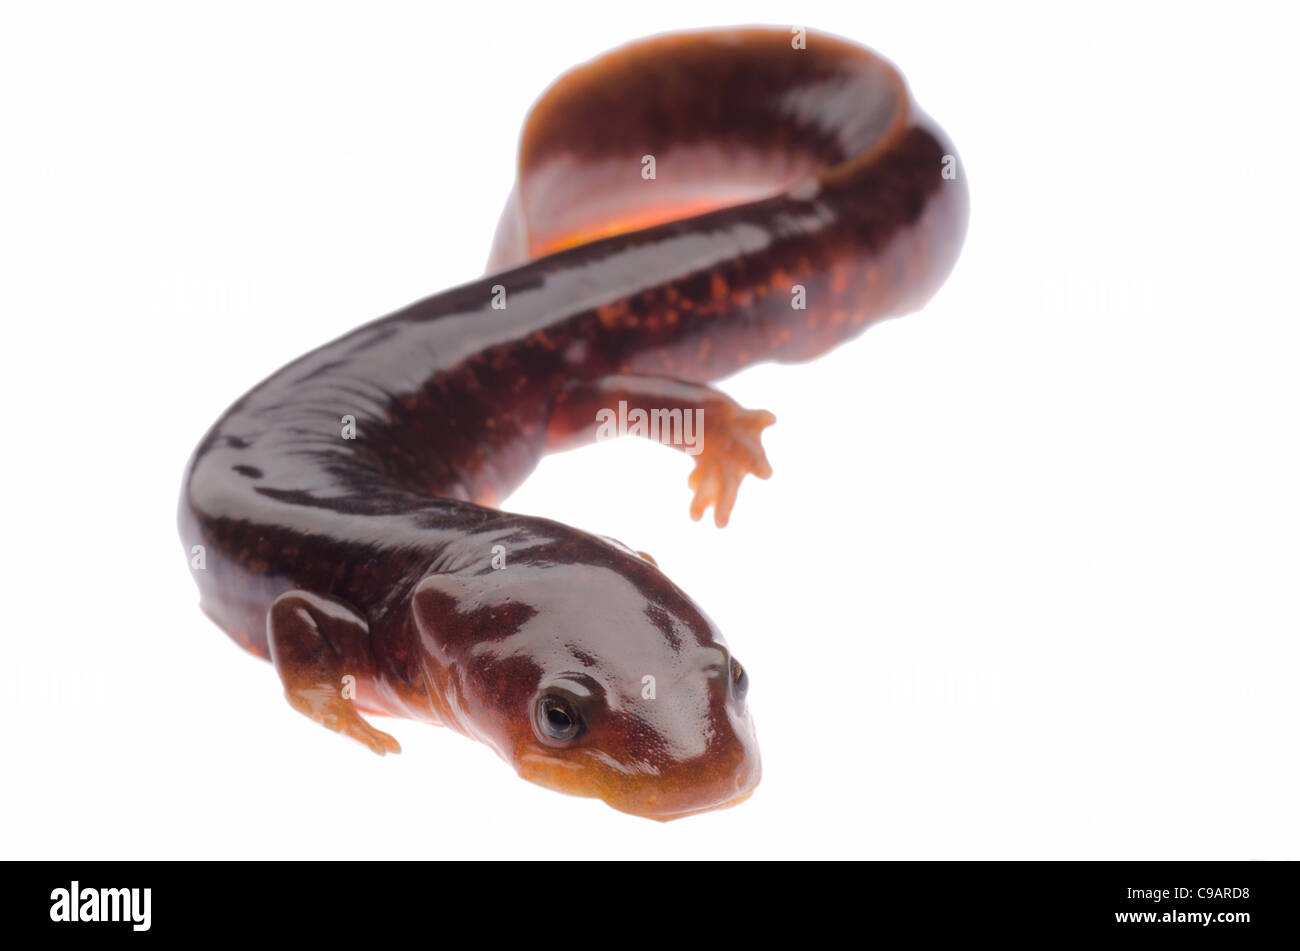 Cinese salamandra tsitou newt isolato su bianco Foto Stock